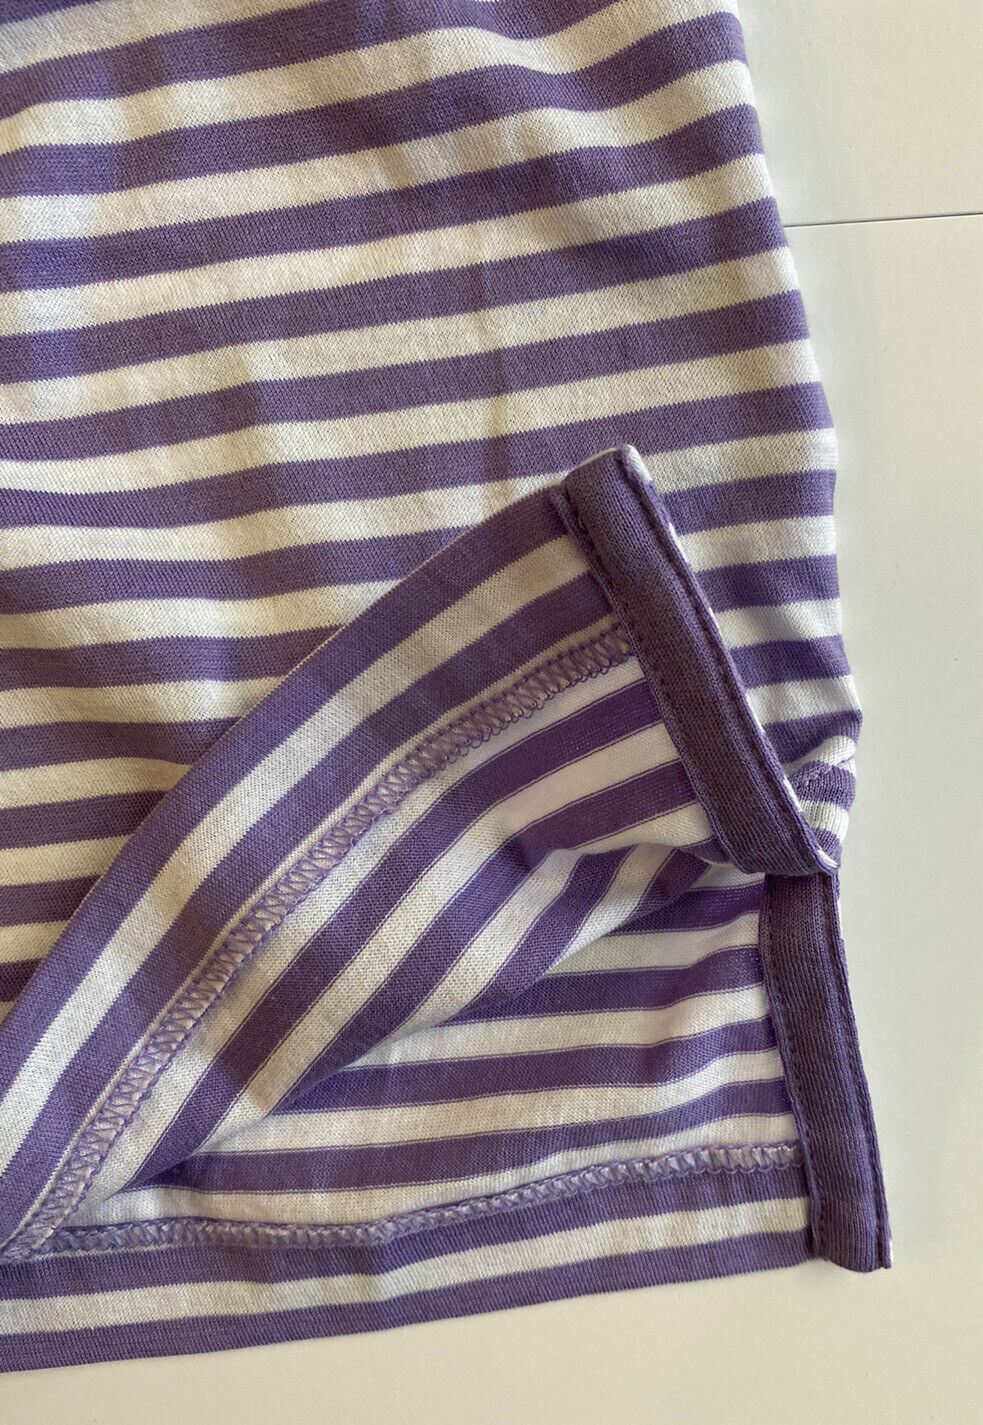 NWT $195 Ralph Lauren Purple Label Lavender Striped Jersey T-Shirt XL